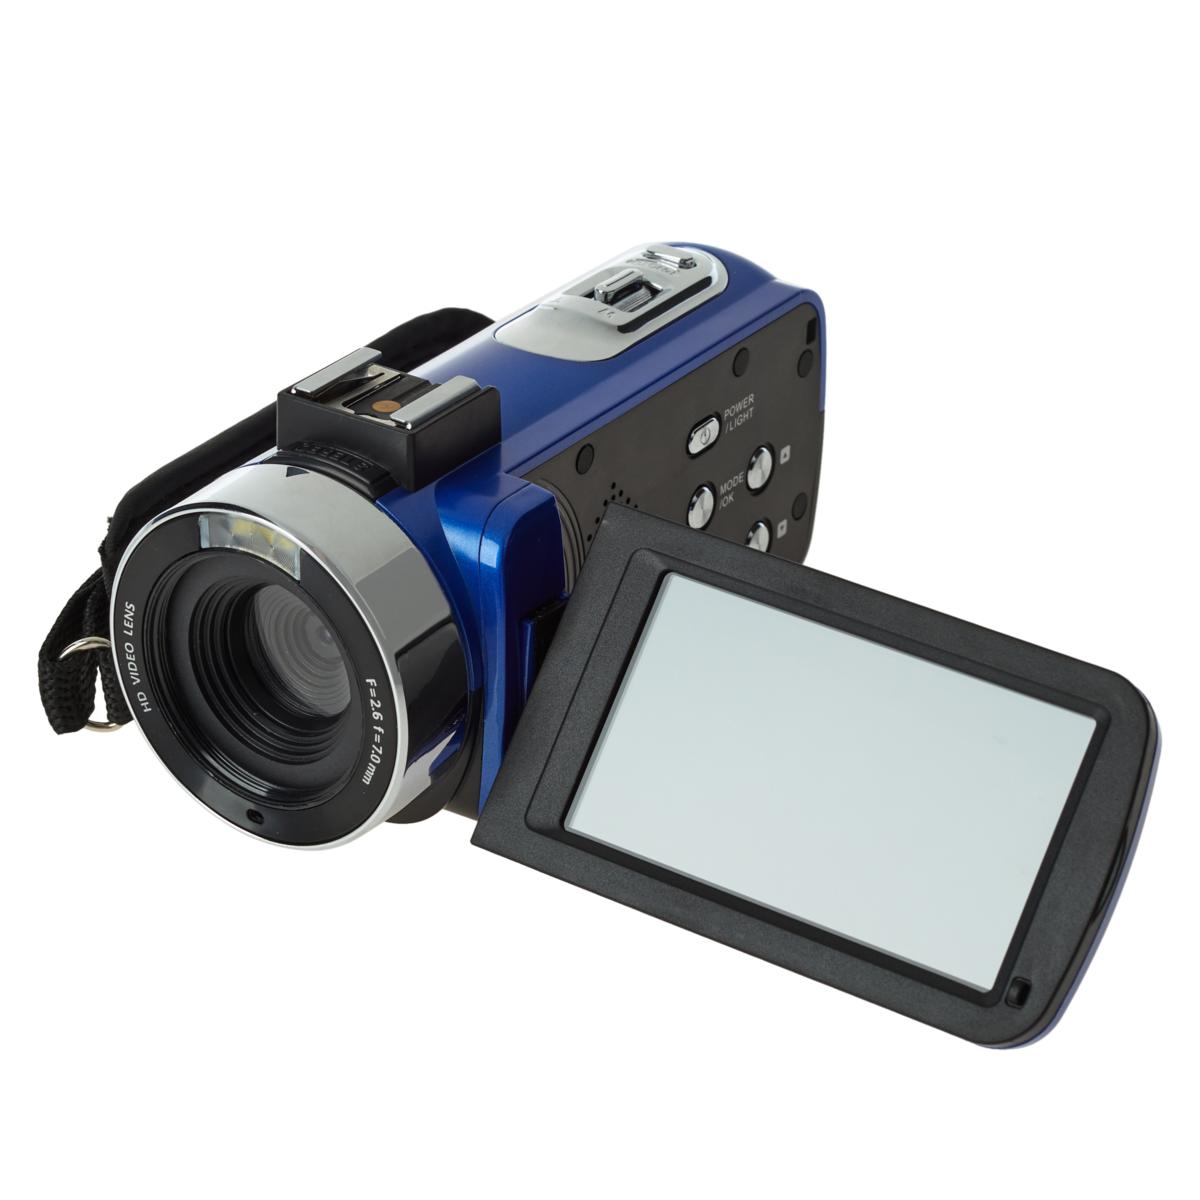 4k-digital-camcorder-id995hd-v1-new-blue-5